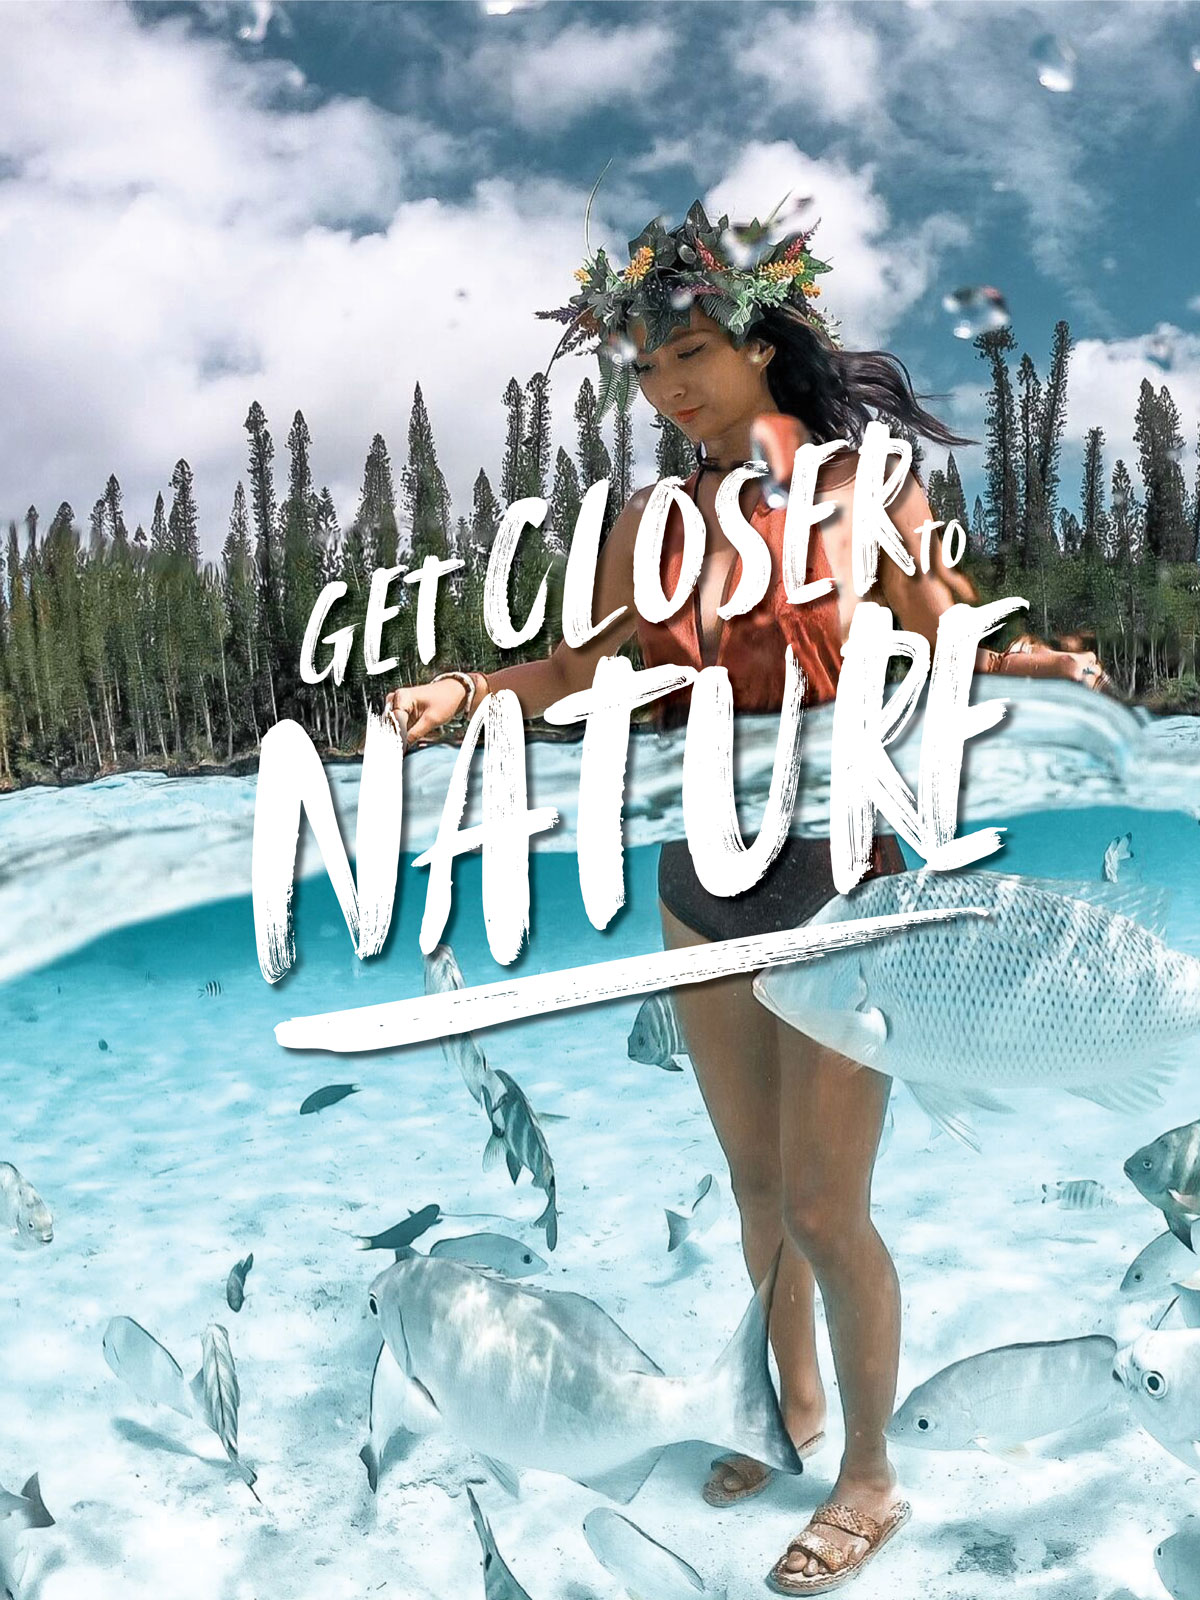 Get closer nature